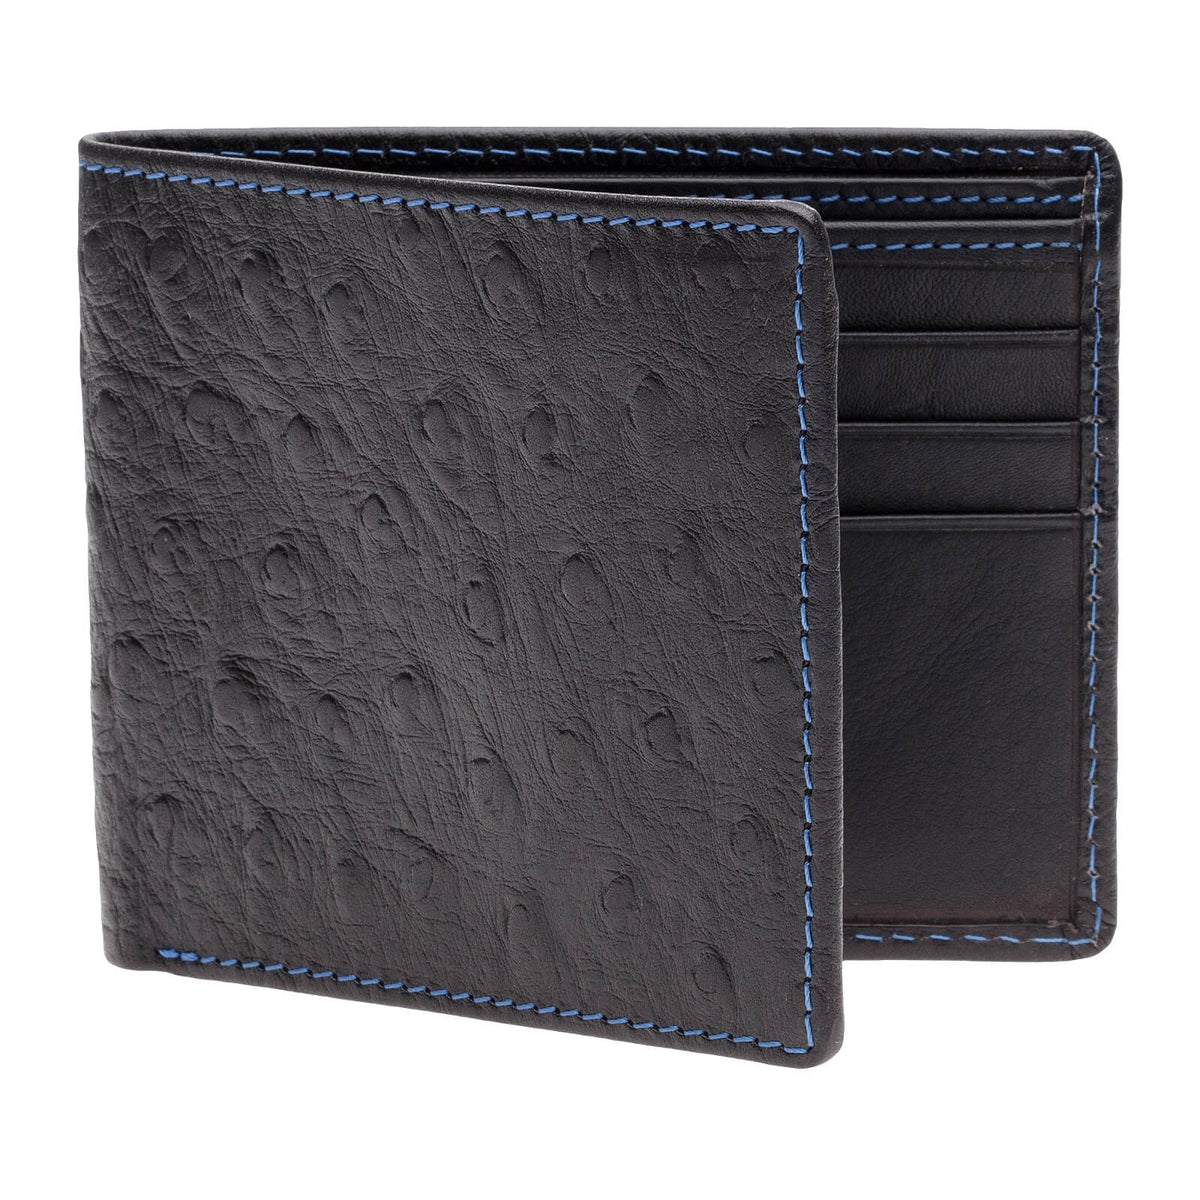 Black Mock Ostrich Vegetable Tan Leather Wallet - Cobalt / Black / One Size | Mens Fashion &amp; Leather Goods by Roger Ximenez